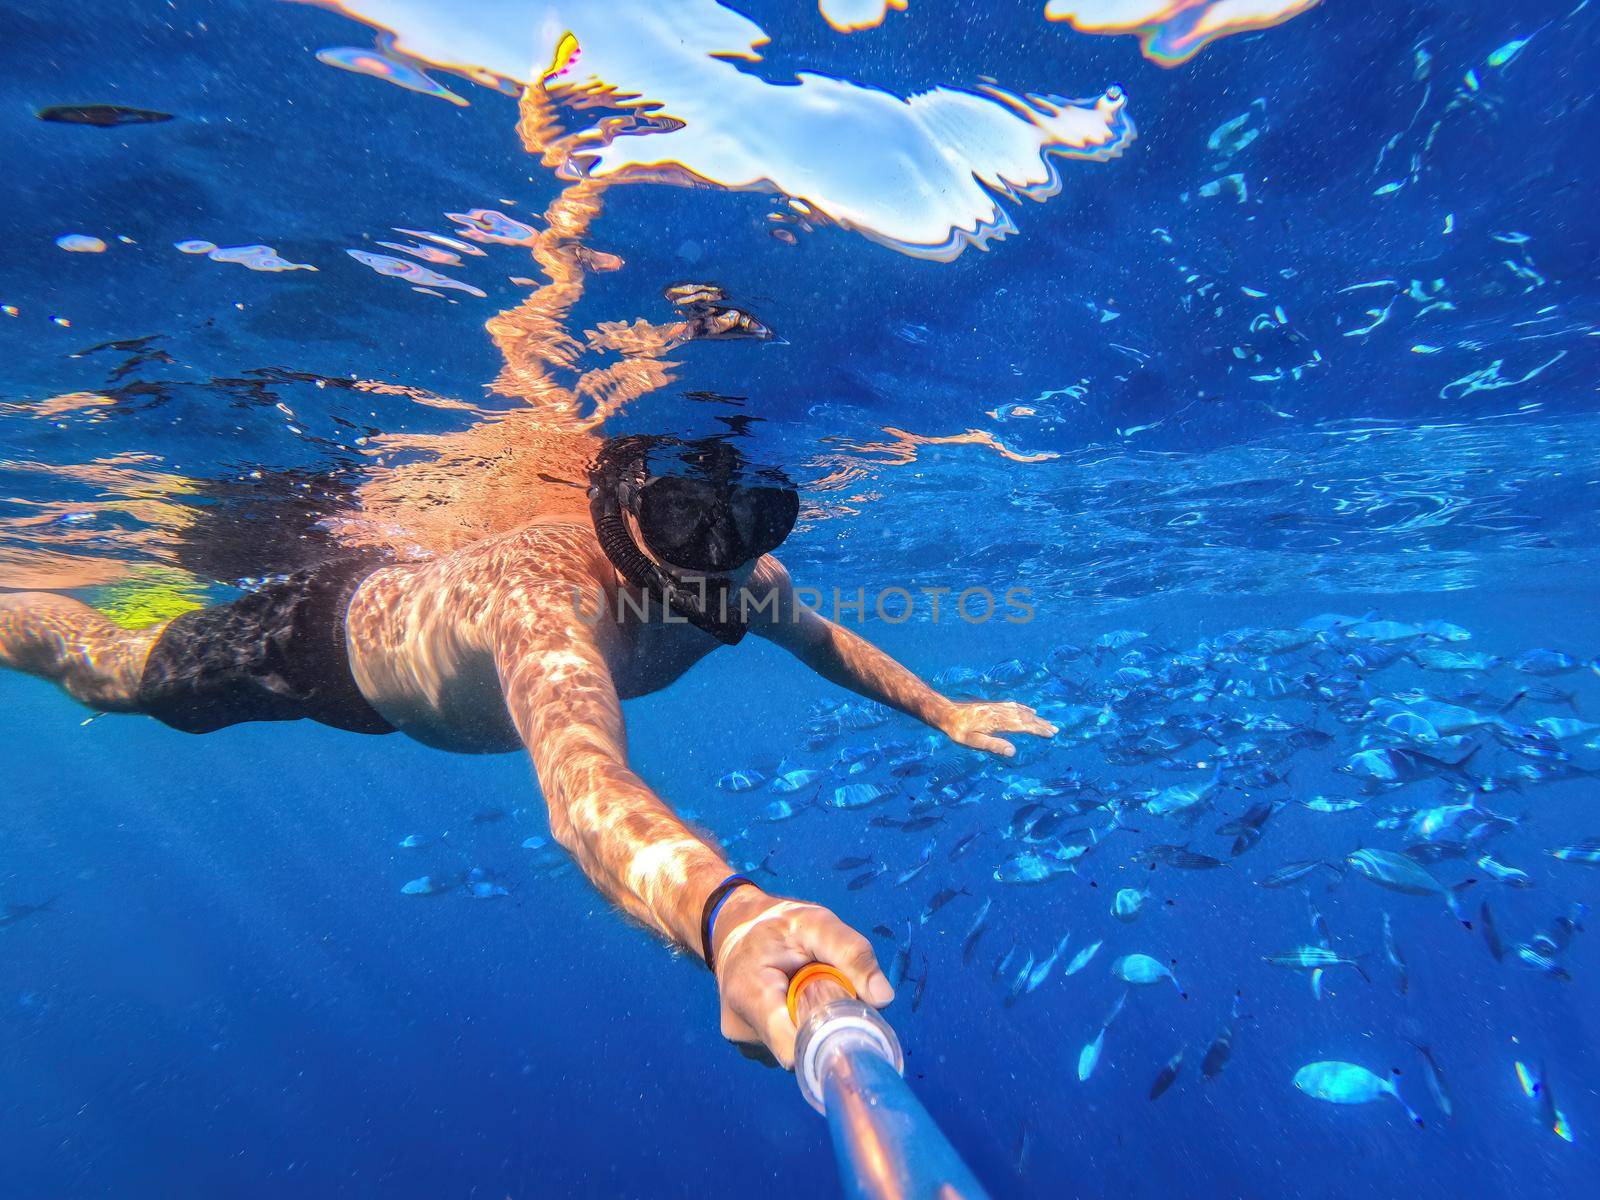 Snorkel swim in blue water with school of Caesio Striata coral fish, Red Sea, Egypt by artush